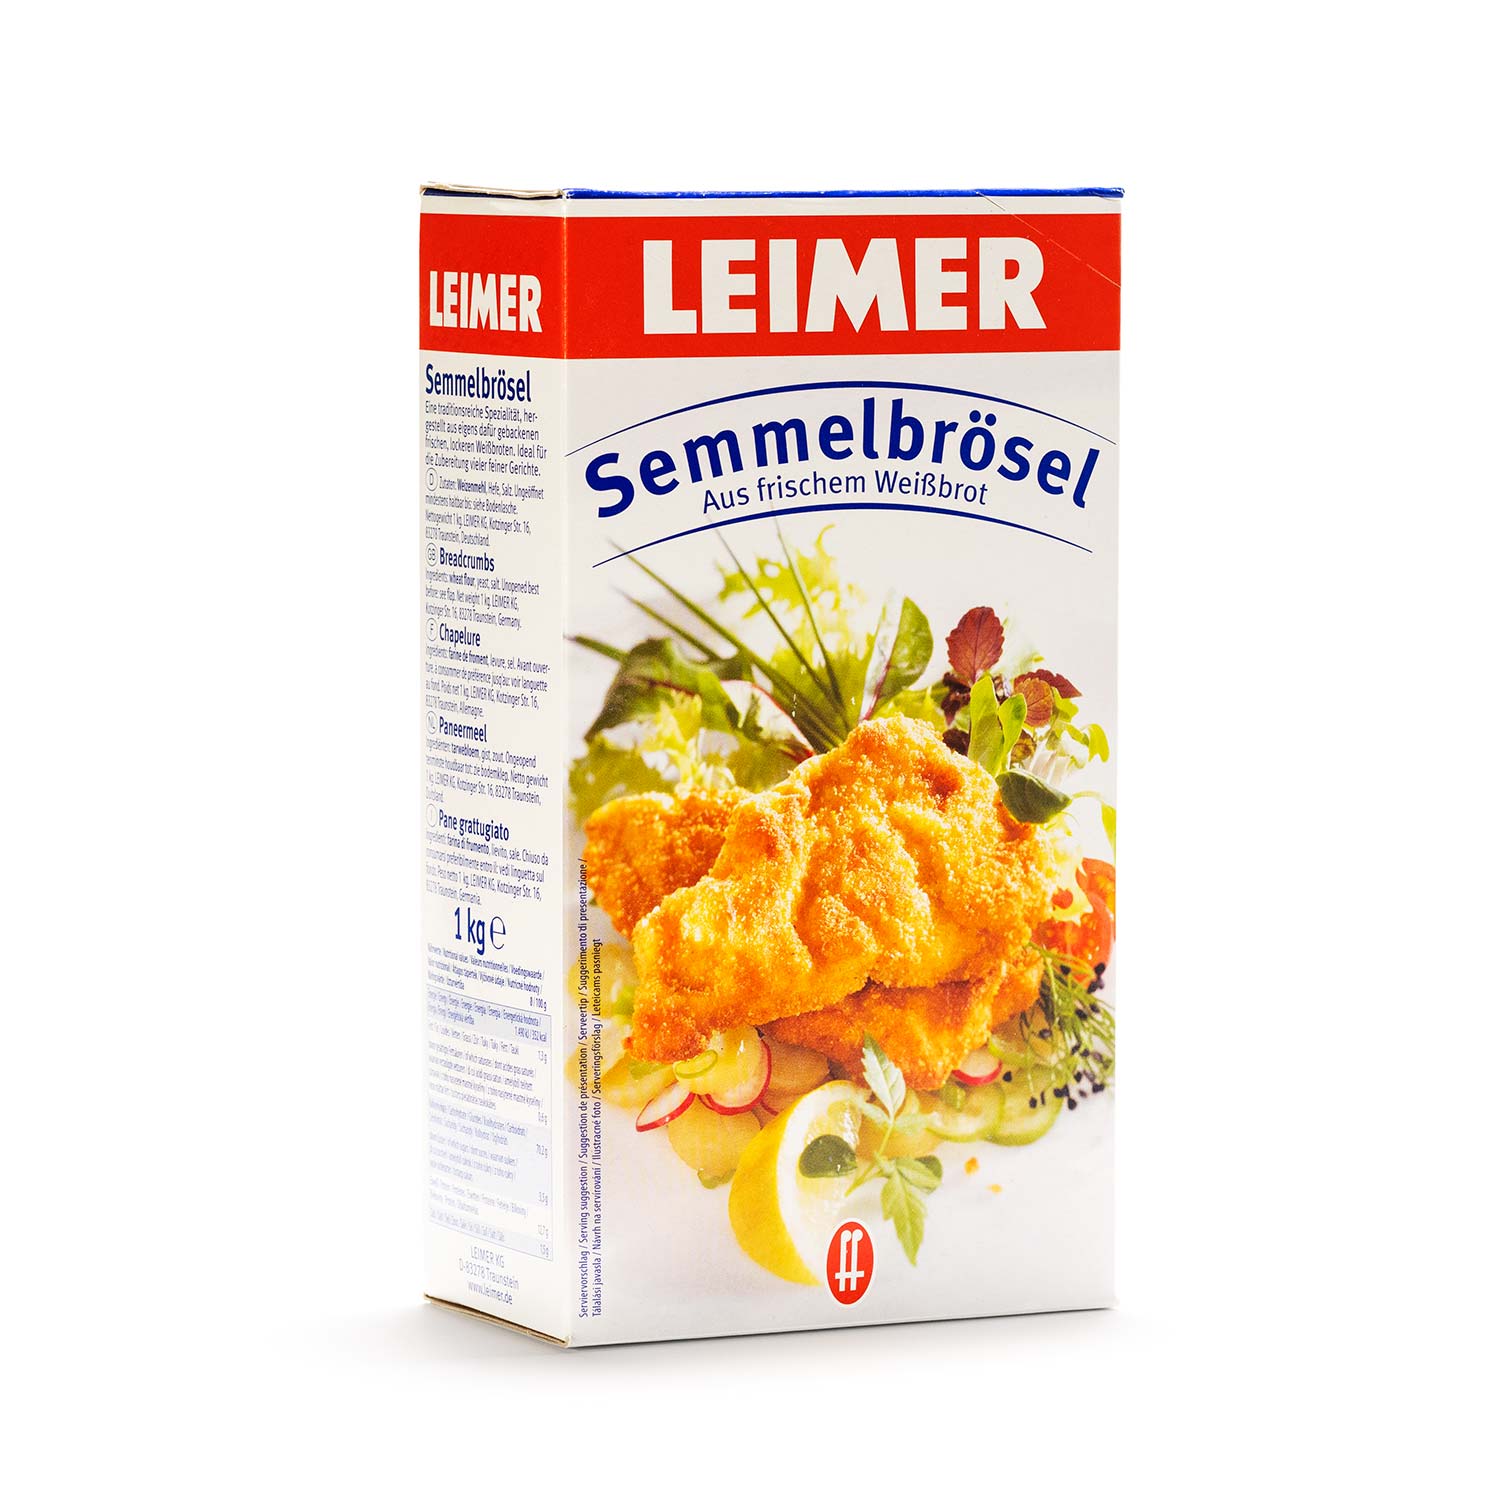 Leimer-Semmel-Broesel-web_1.jpg